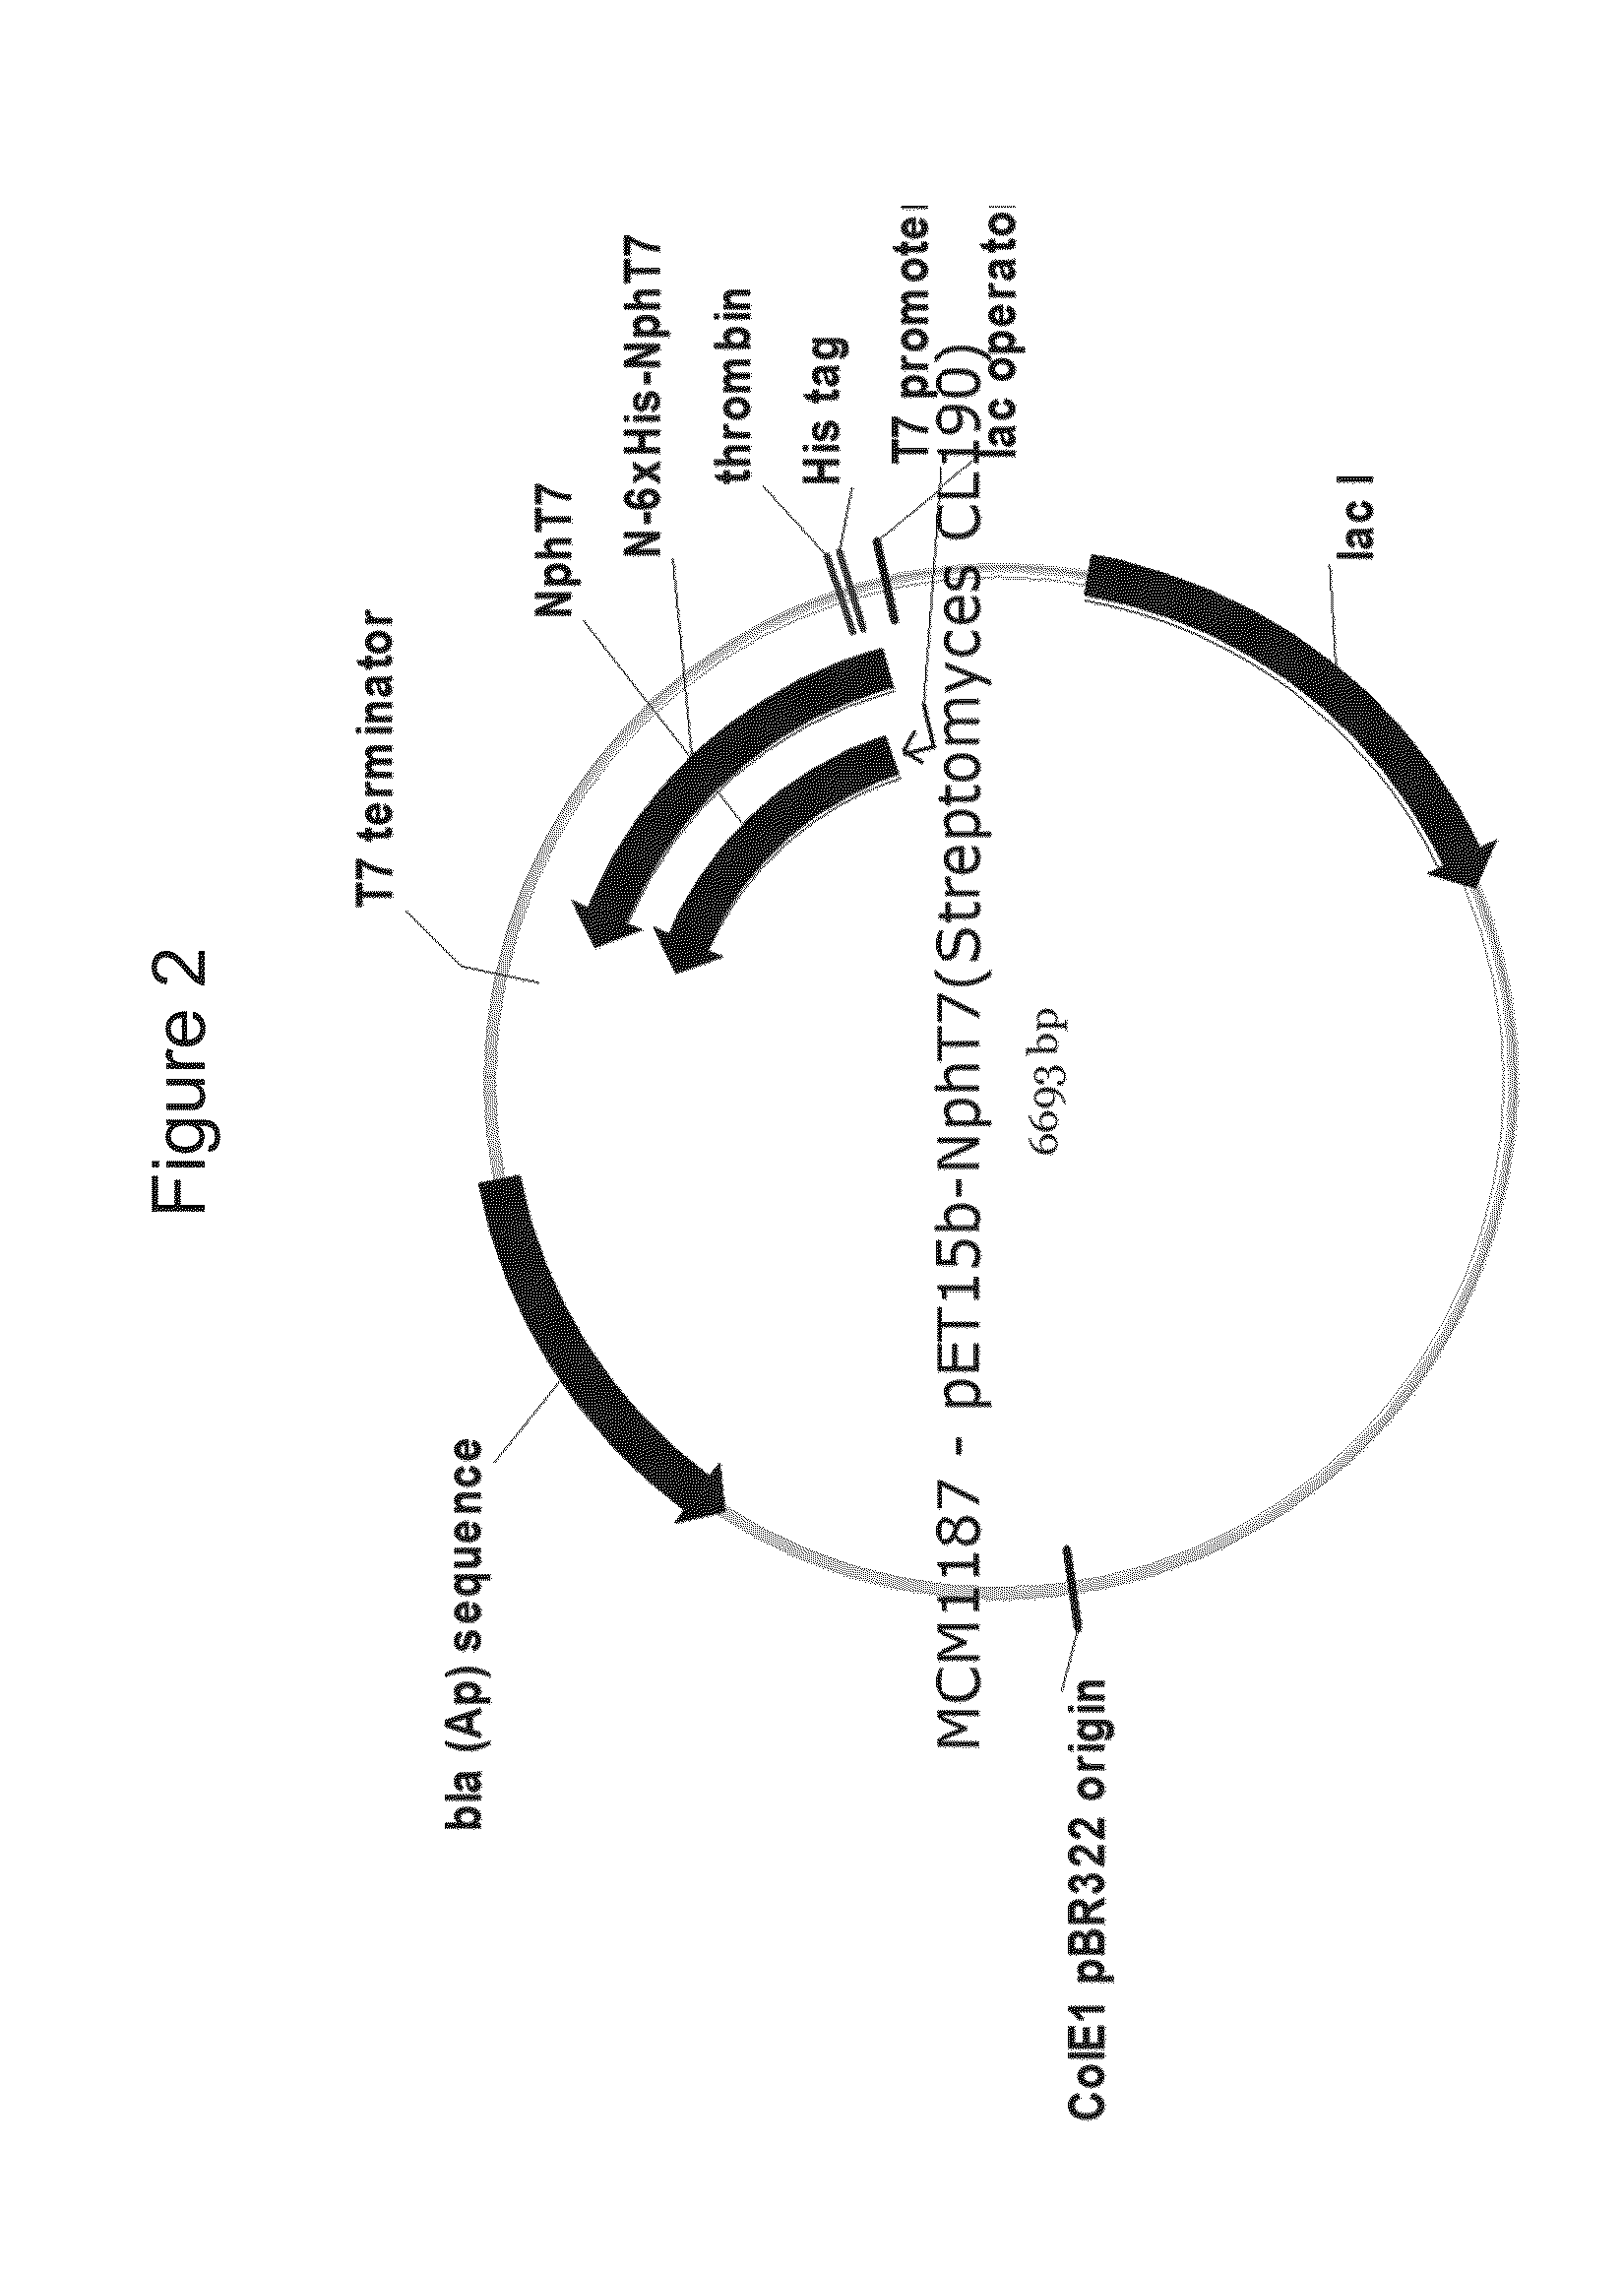 Production of isoprene, isoprenoid precursors, and isoprenoids using acetoacetyl-coa synthase